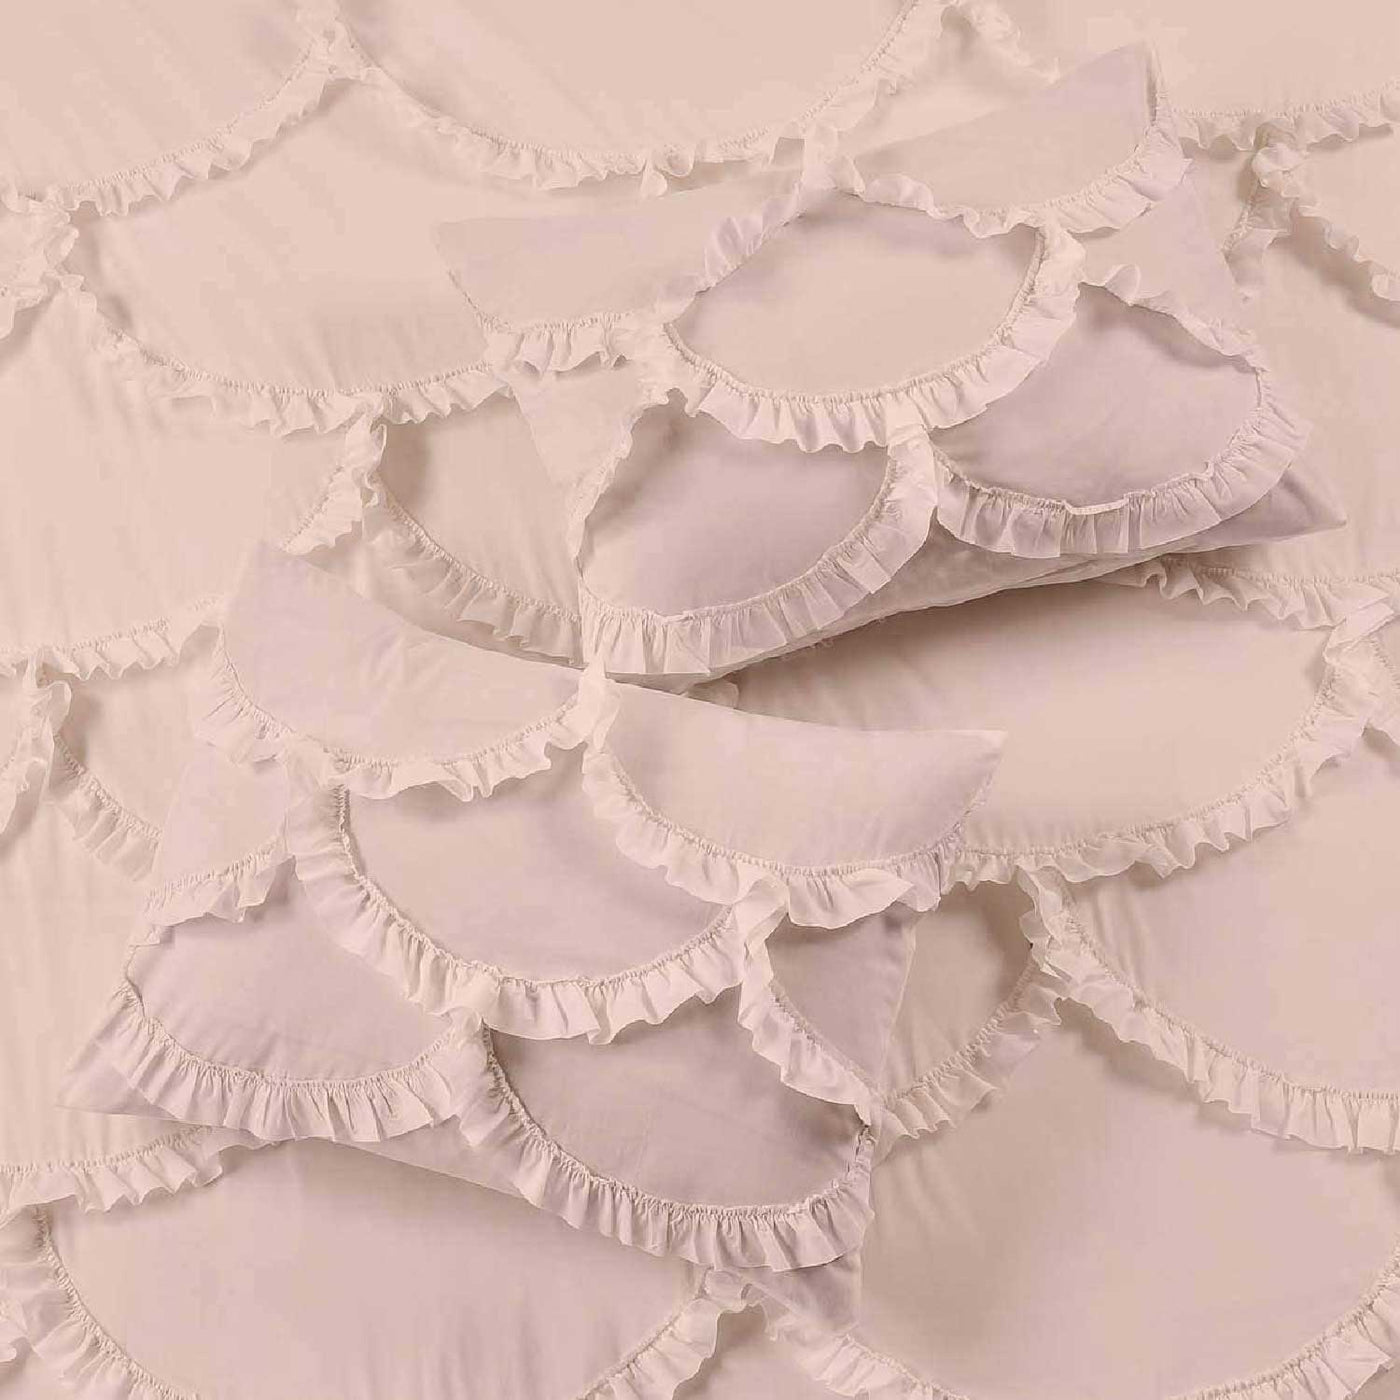 Sirena Shabby Chic 300 TC Egyptian Cotton Duvet Cover Set - Blush